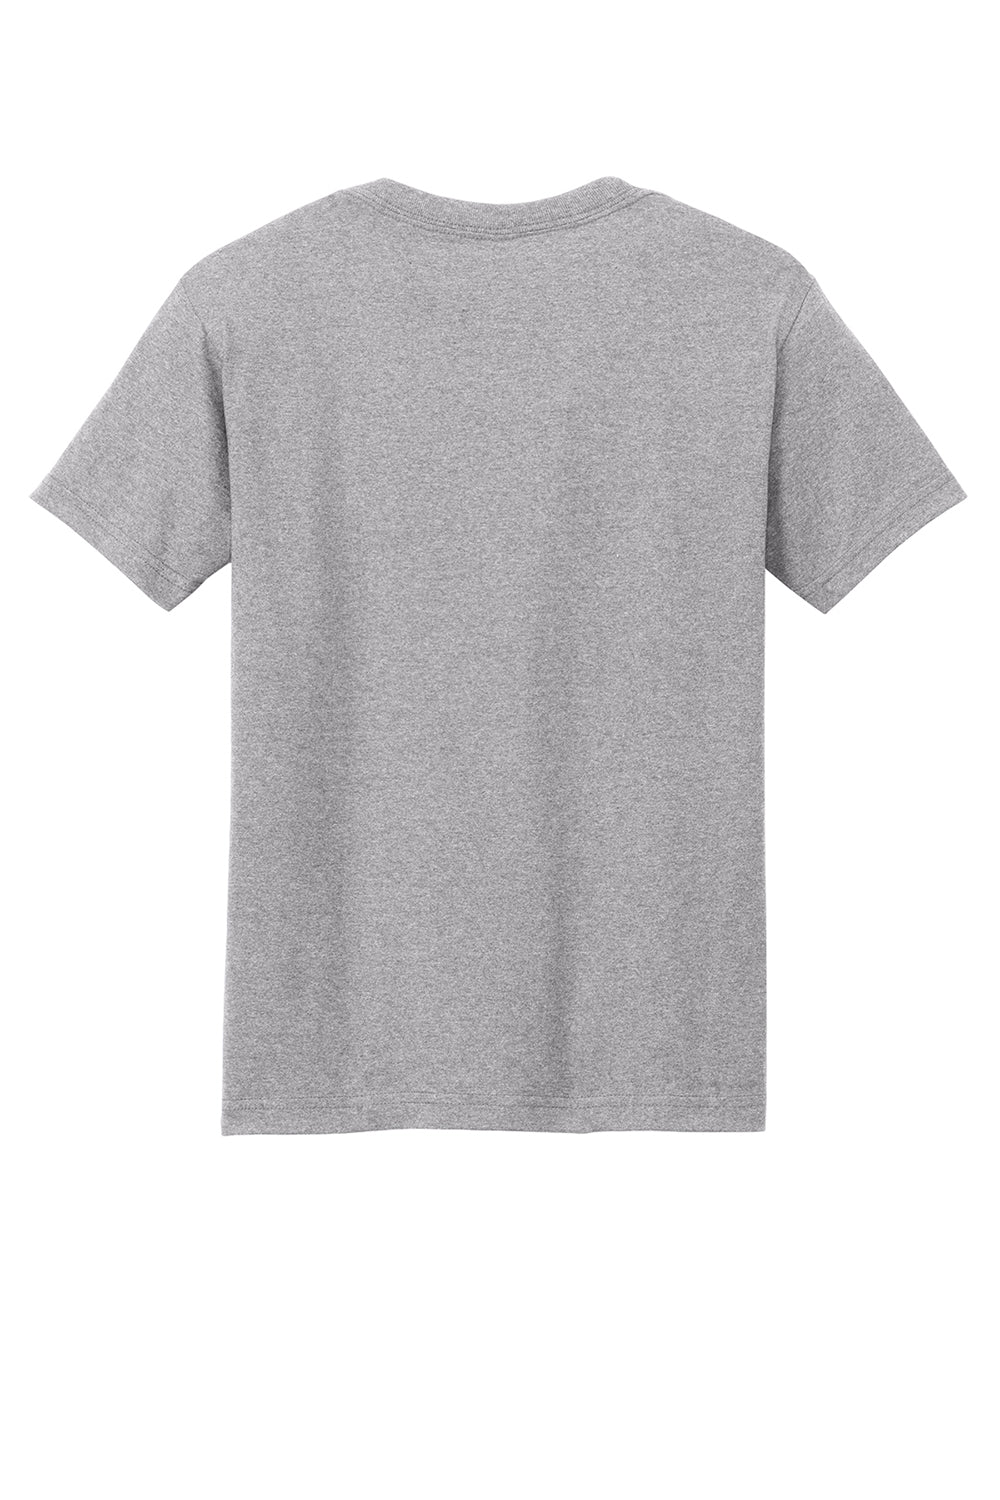 American Apparel 1301/AL1301 Mens Short Sleeve Crewneck T-Shirt Heather Grey Flat Back